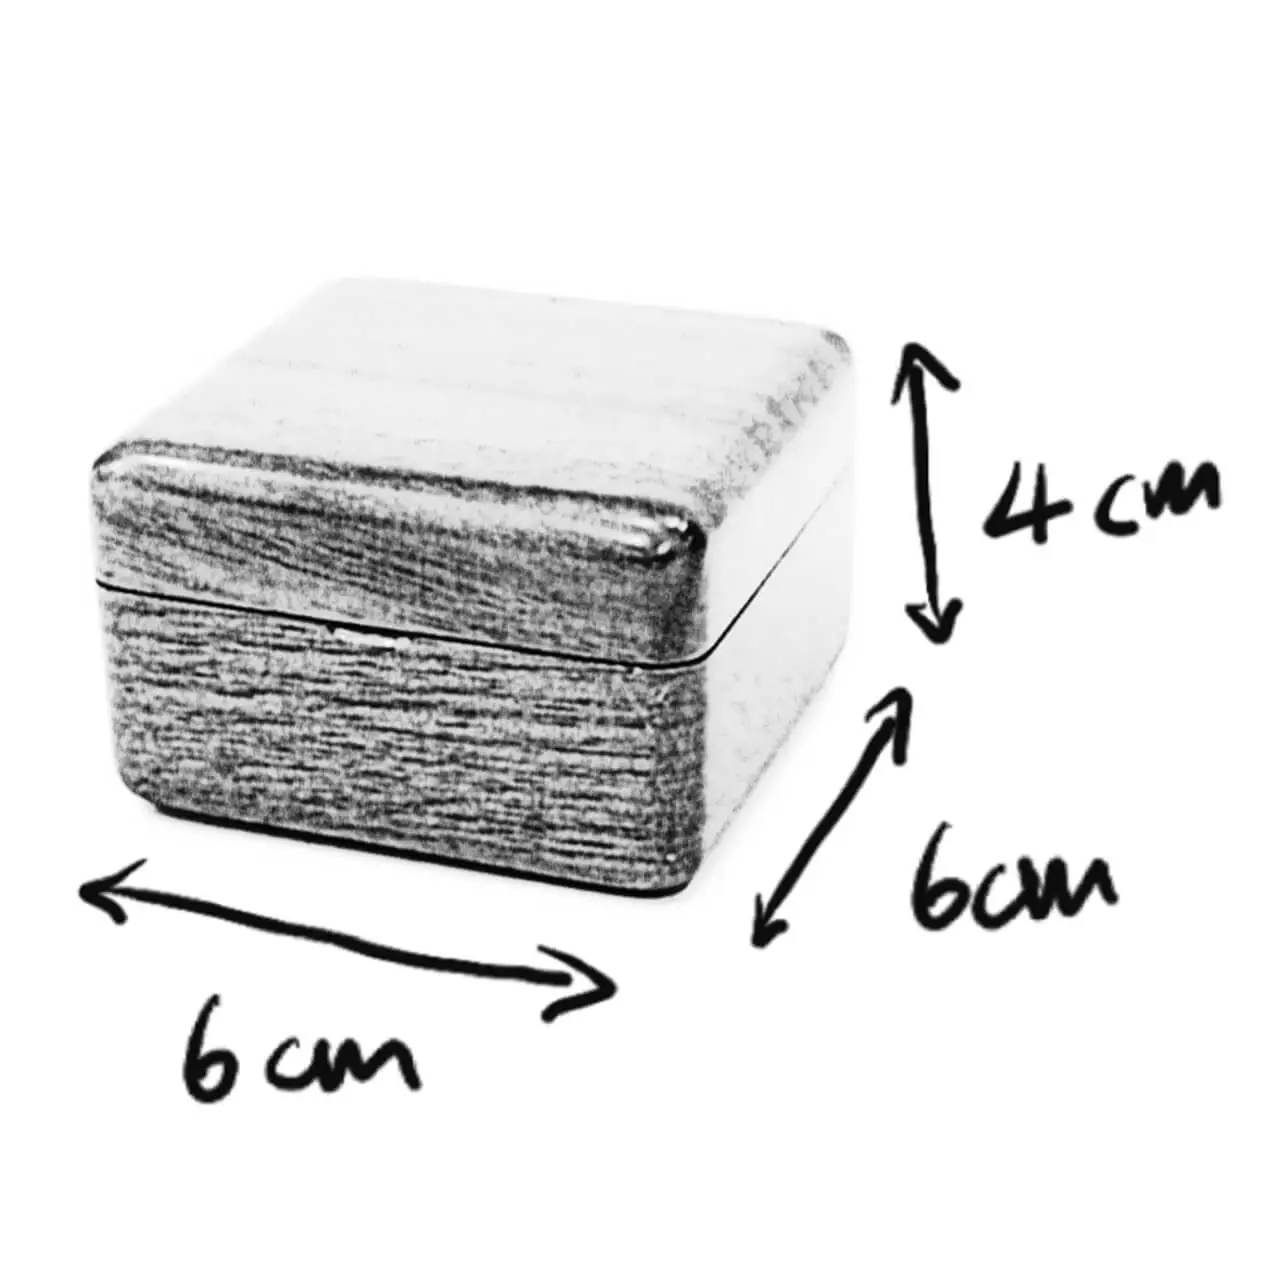 Bowen Ring Box dimensions